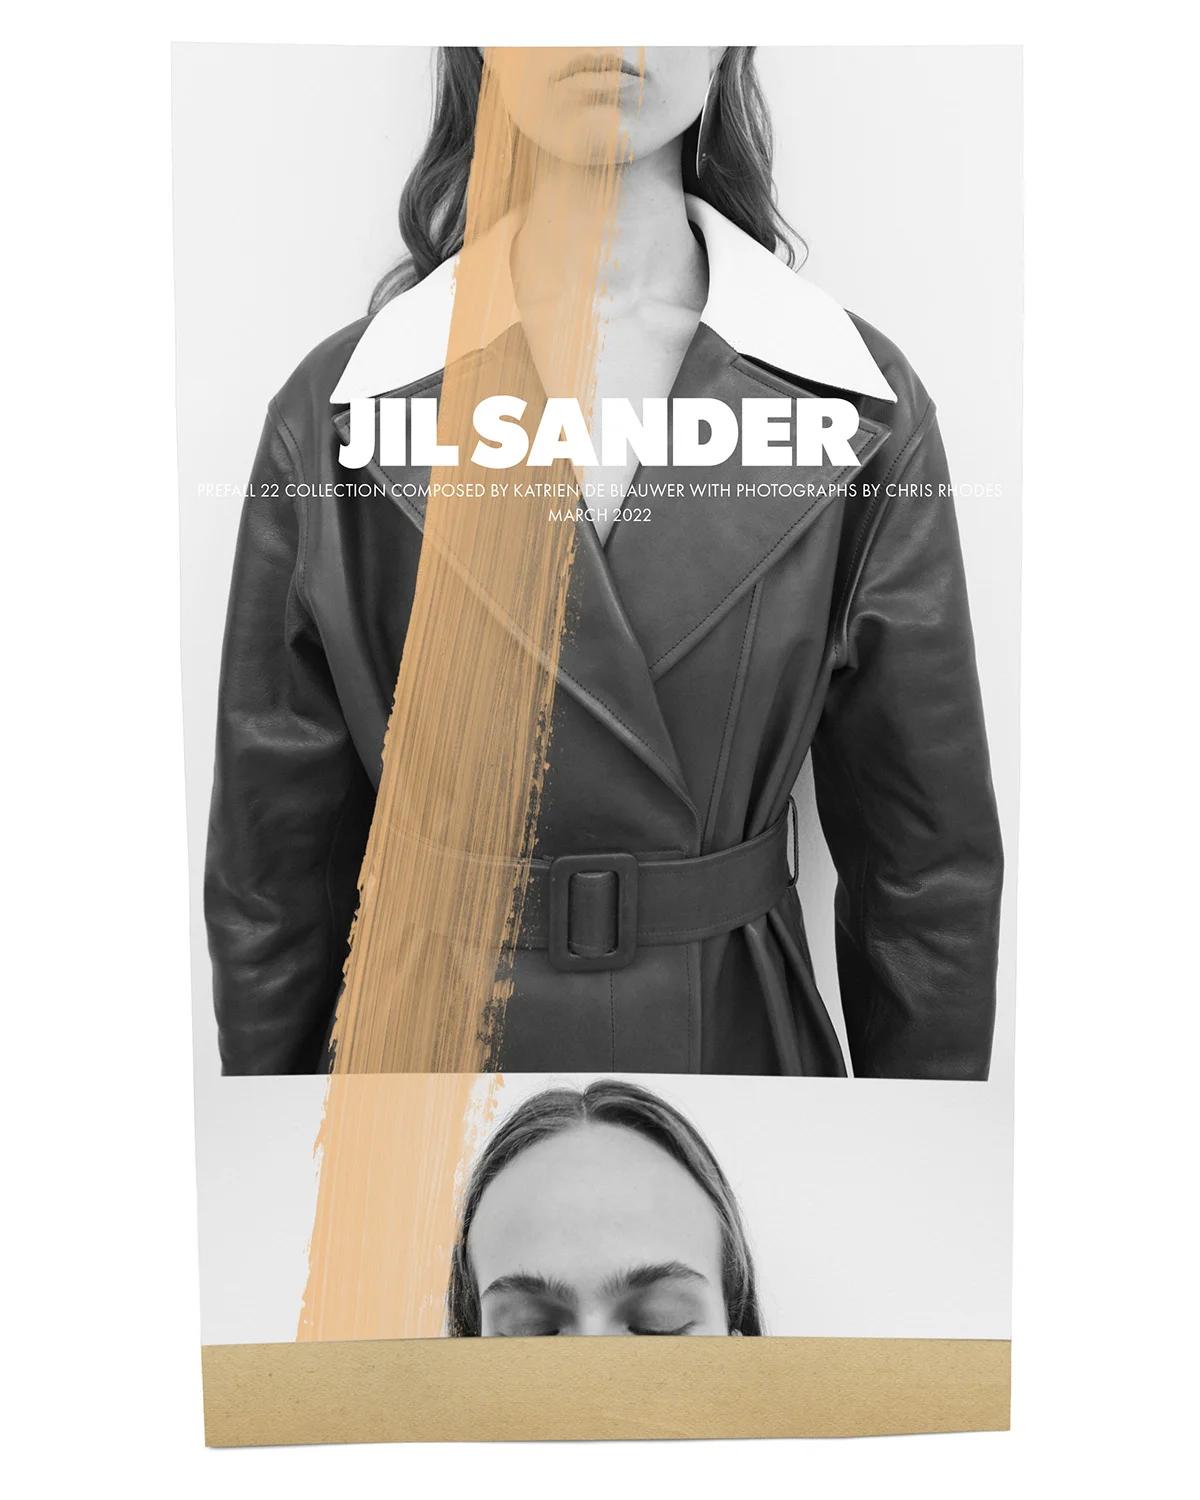 Jil Sander Pre-Fall 2022 Ad Campaign Composed by Katrien de